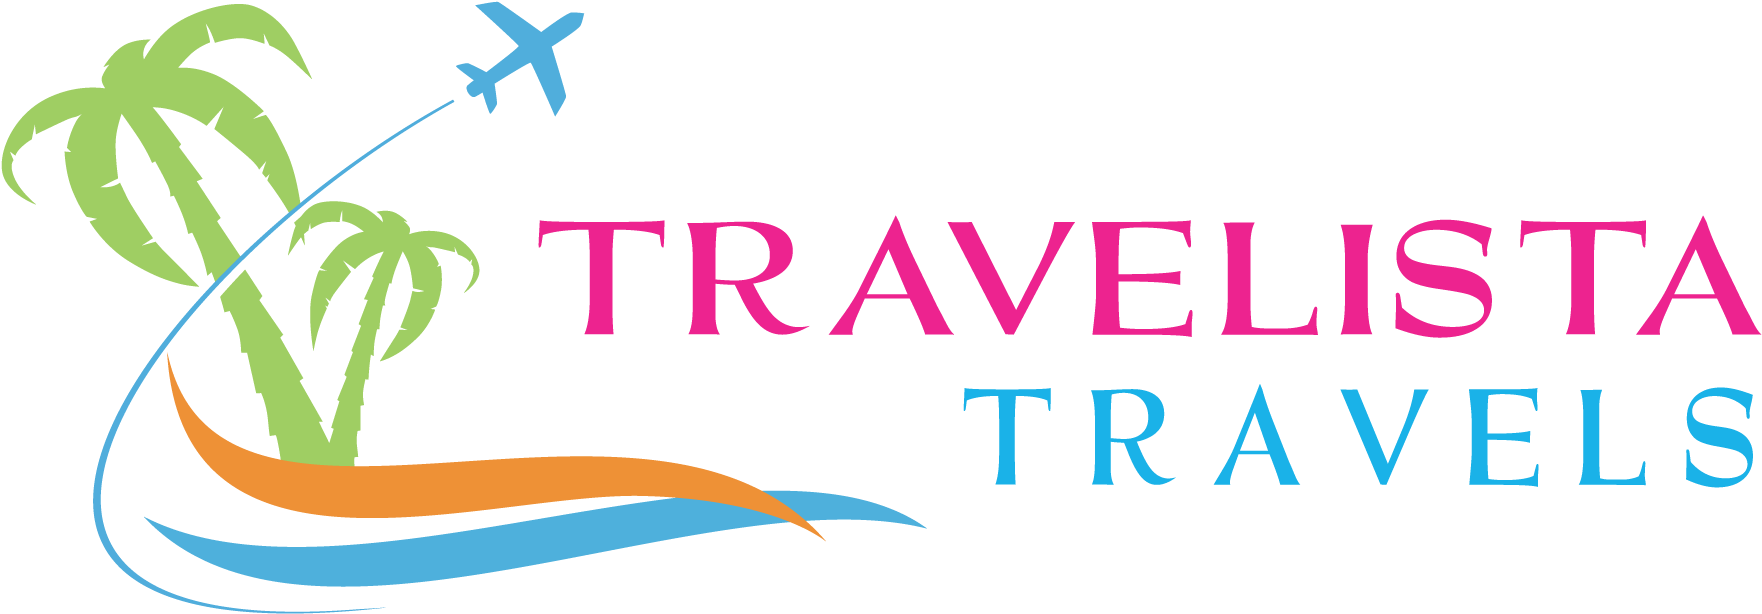 Логотип путешествия. Тревел логотип. Логотип Travel путешествия. Магазин путешествий эмблема. Intui travel